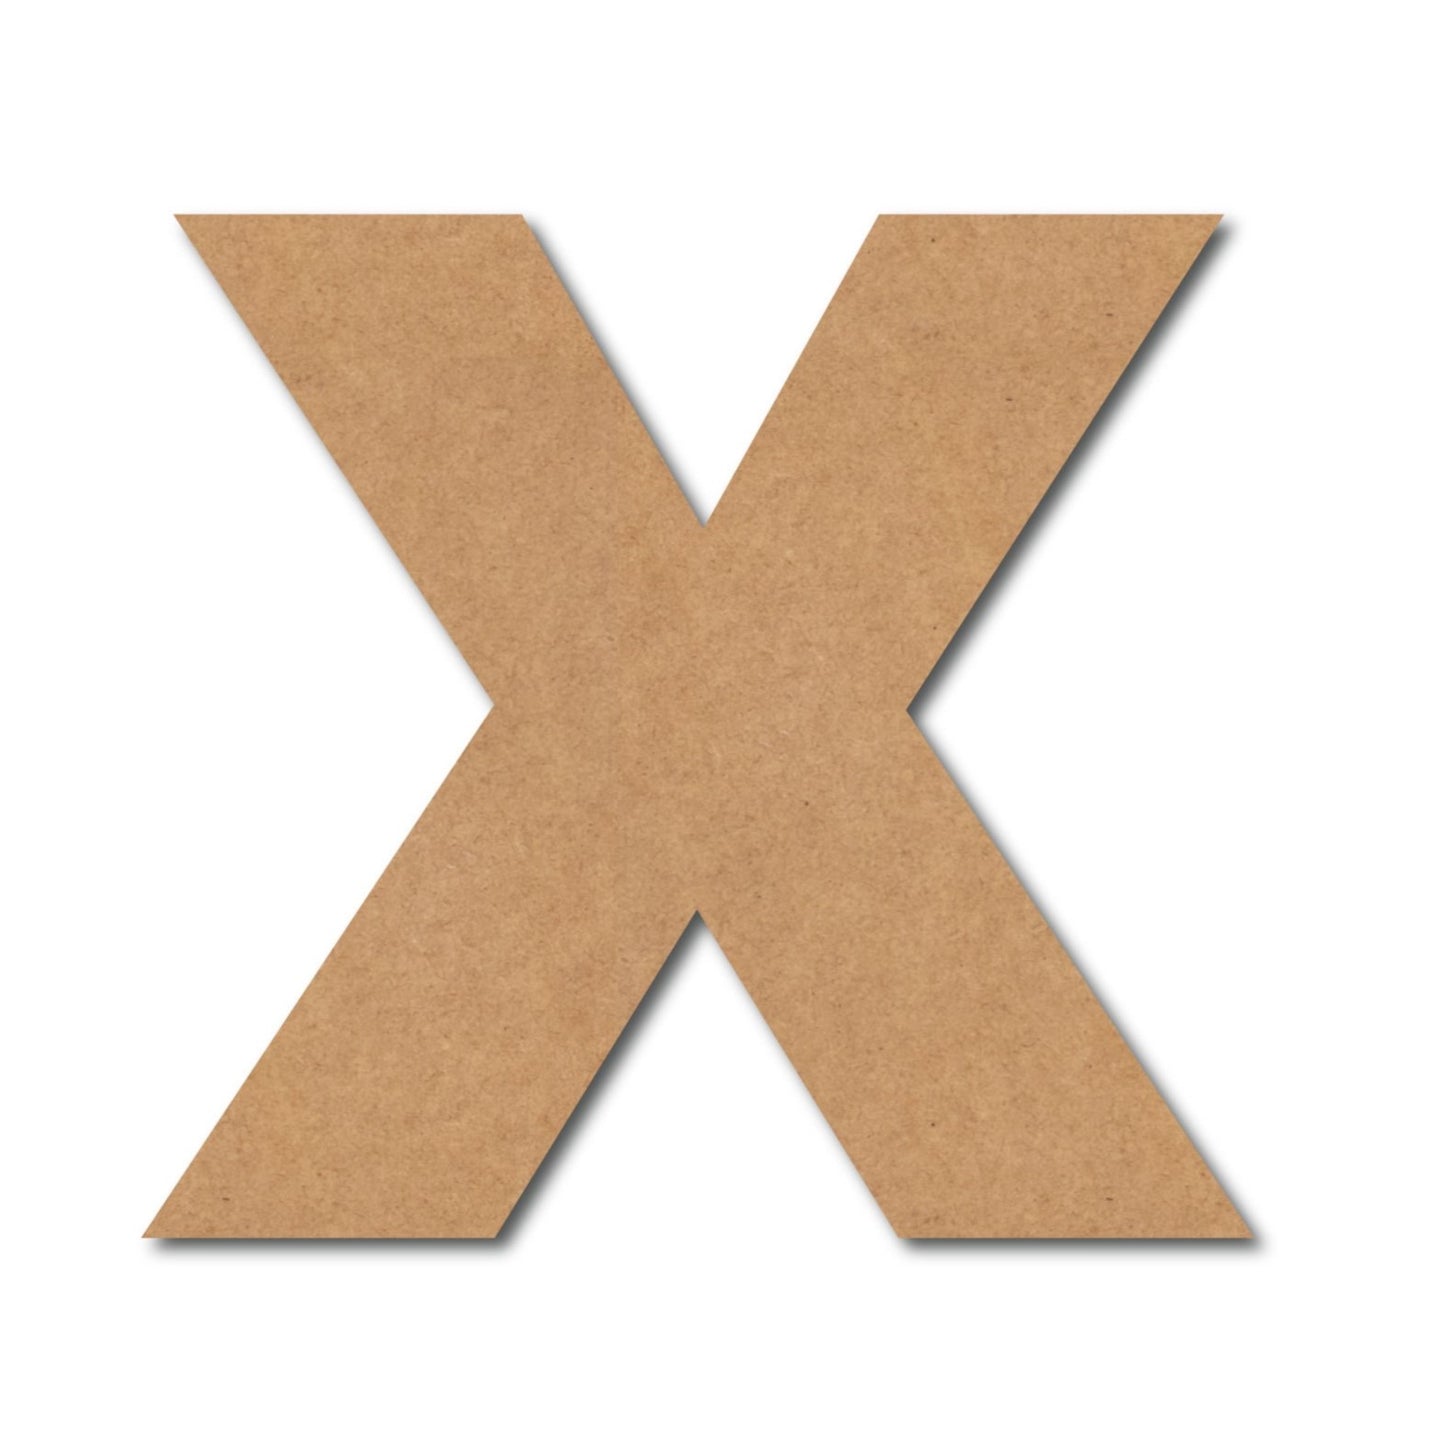 Alphabet X Monogram Cutout MDF Design 1